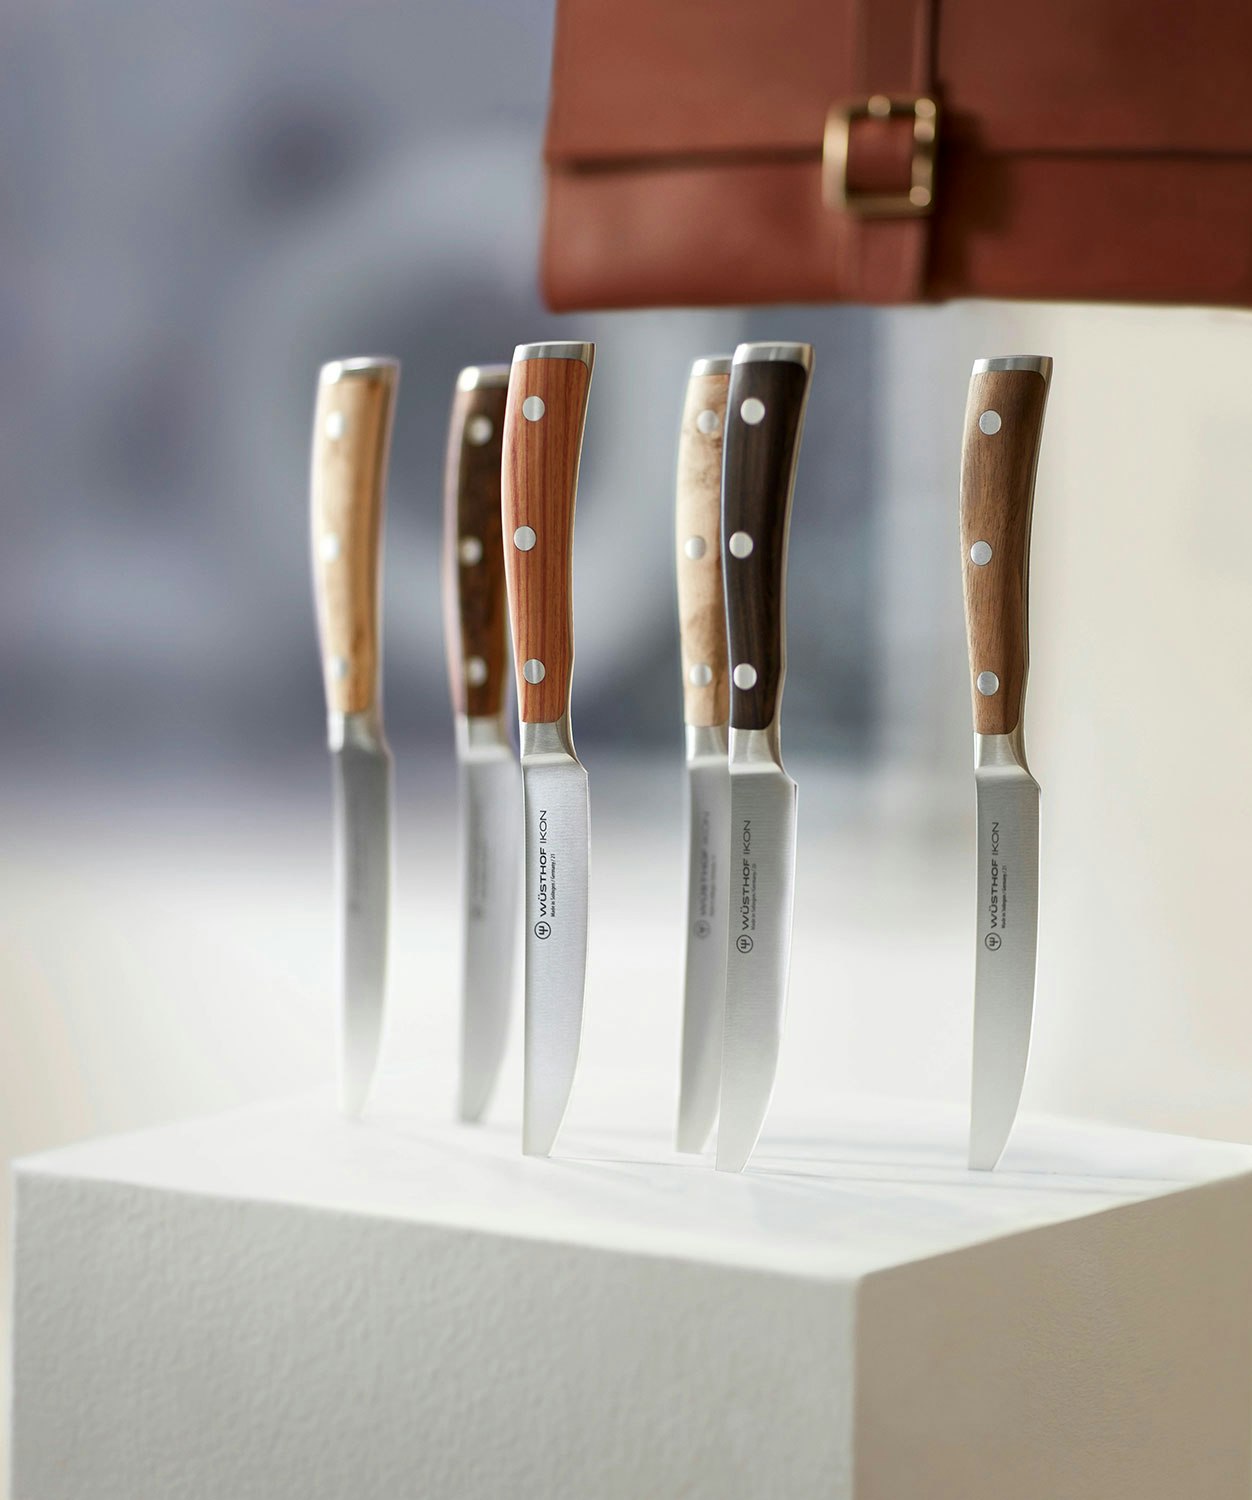 https://royaldesign.com/image/2/wusthof-ikon-steak-knives-with-case-5